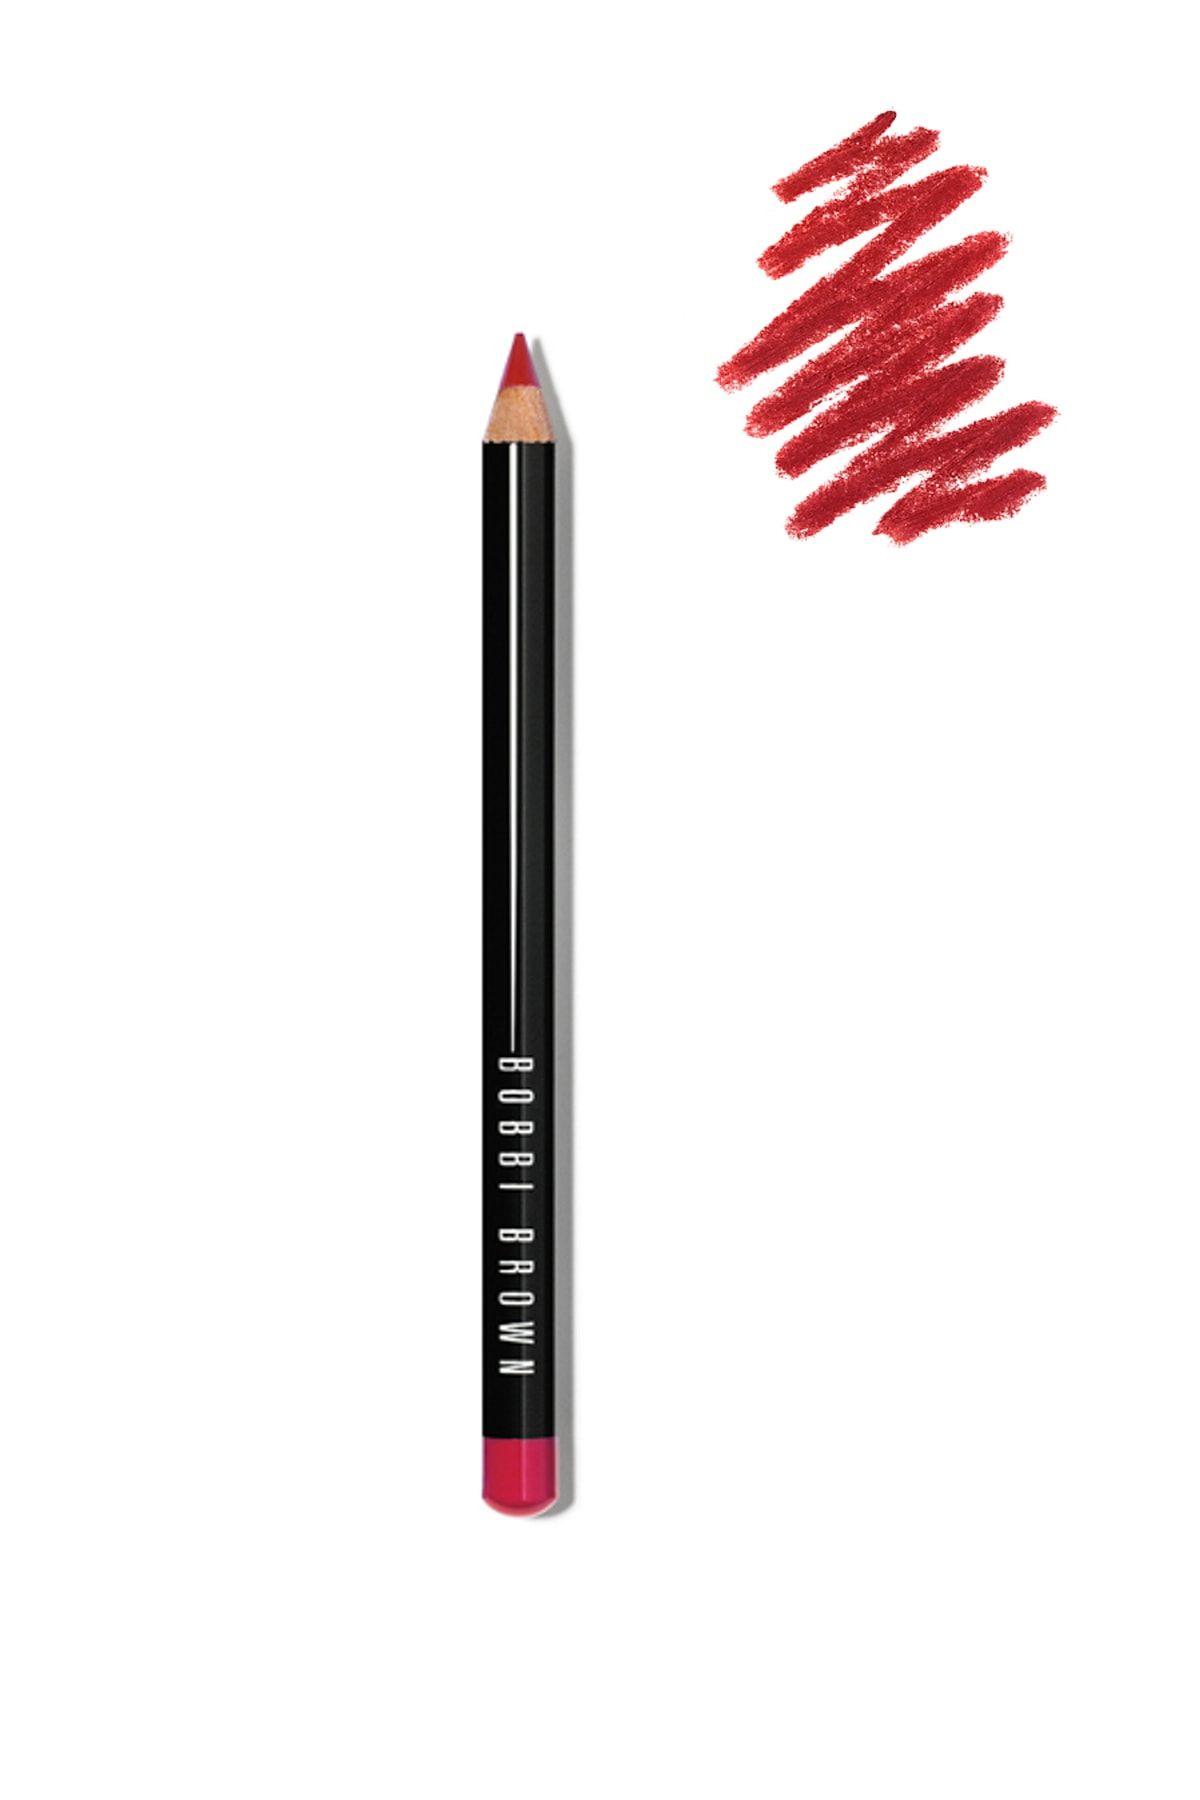 Bobbi Brown Lip Pencil / Dudak Kalemi Fh14 1.0 G Red 716170141602